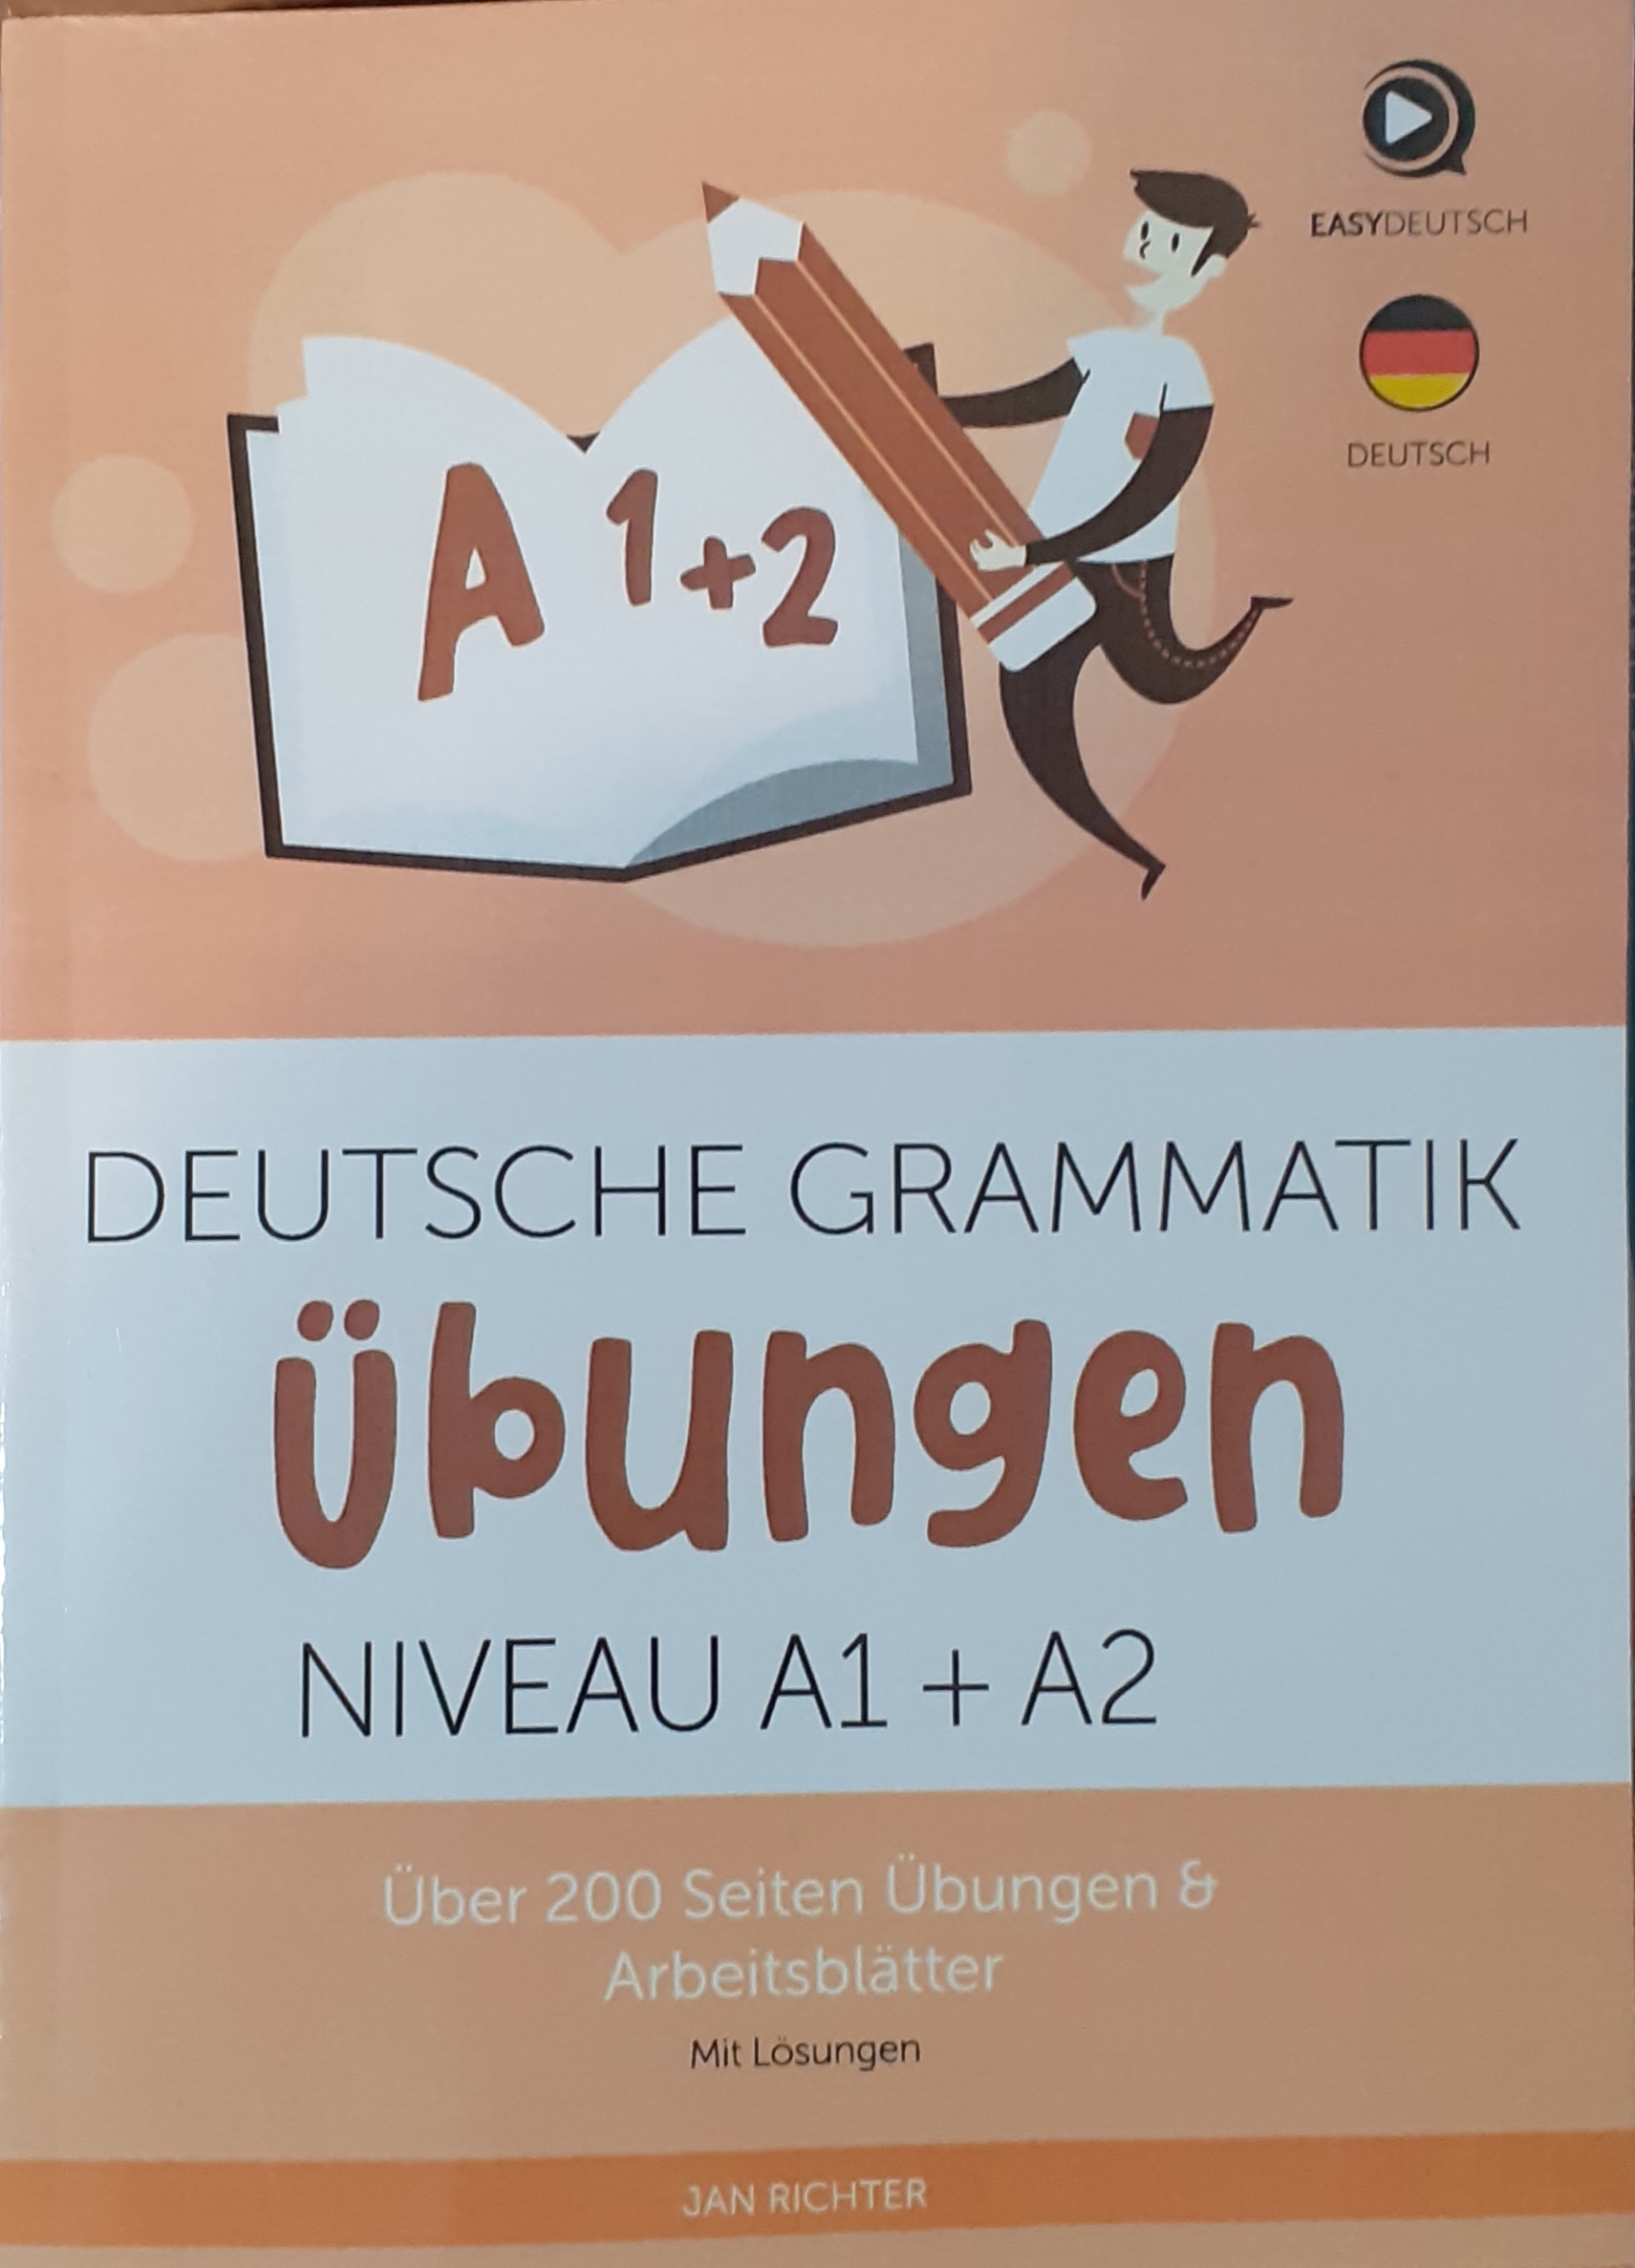 کتاب Deutsche Grammatik Übungen A1+A2